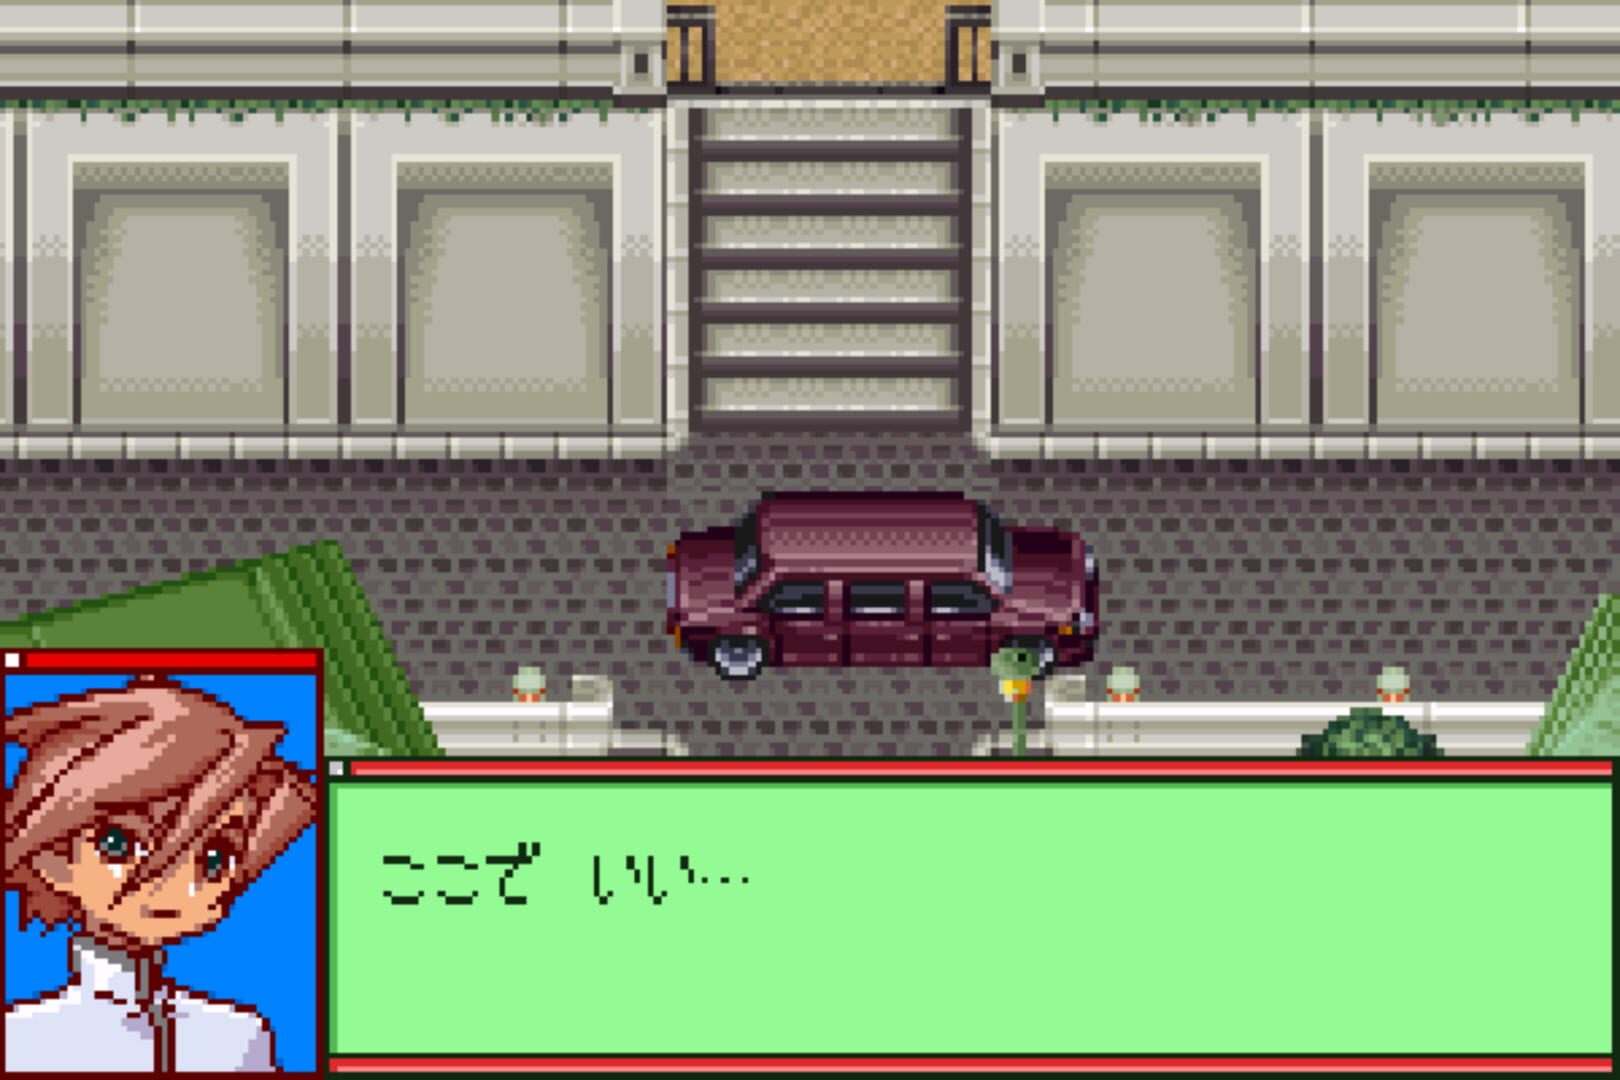 Captura de pantalla - Medarot Navi: Kabuto Version